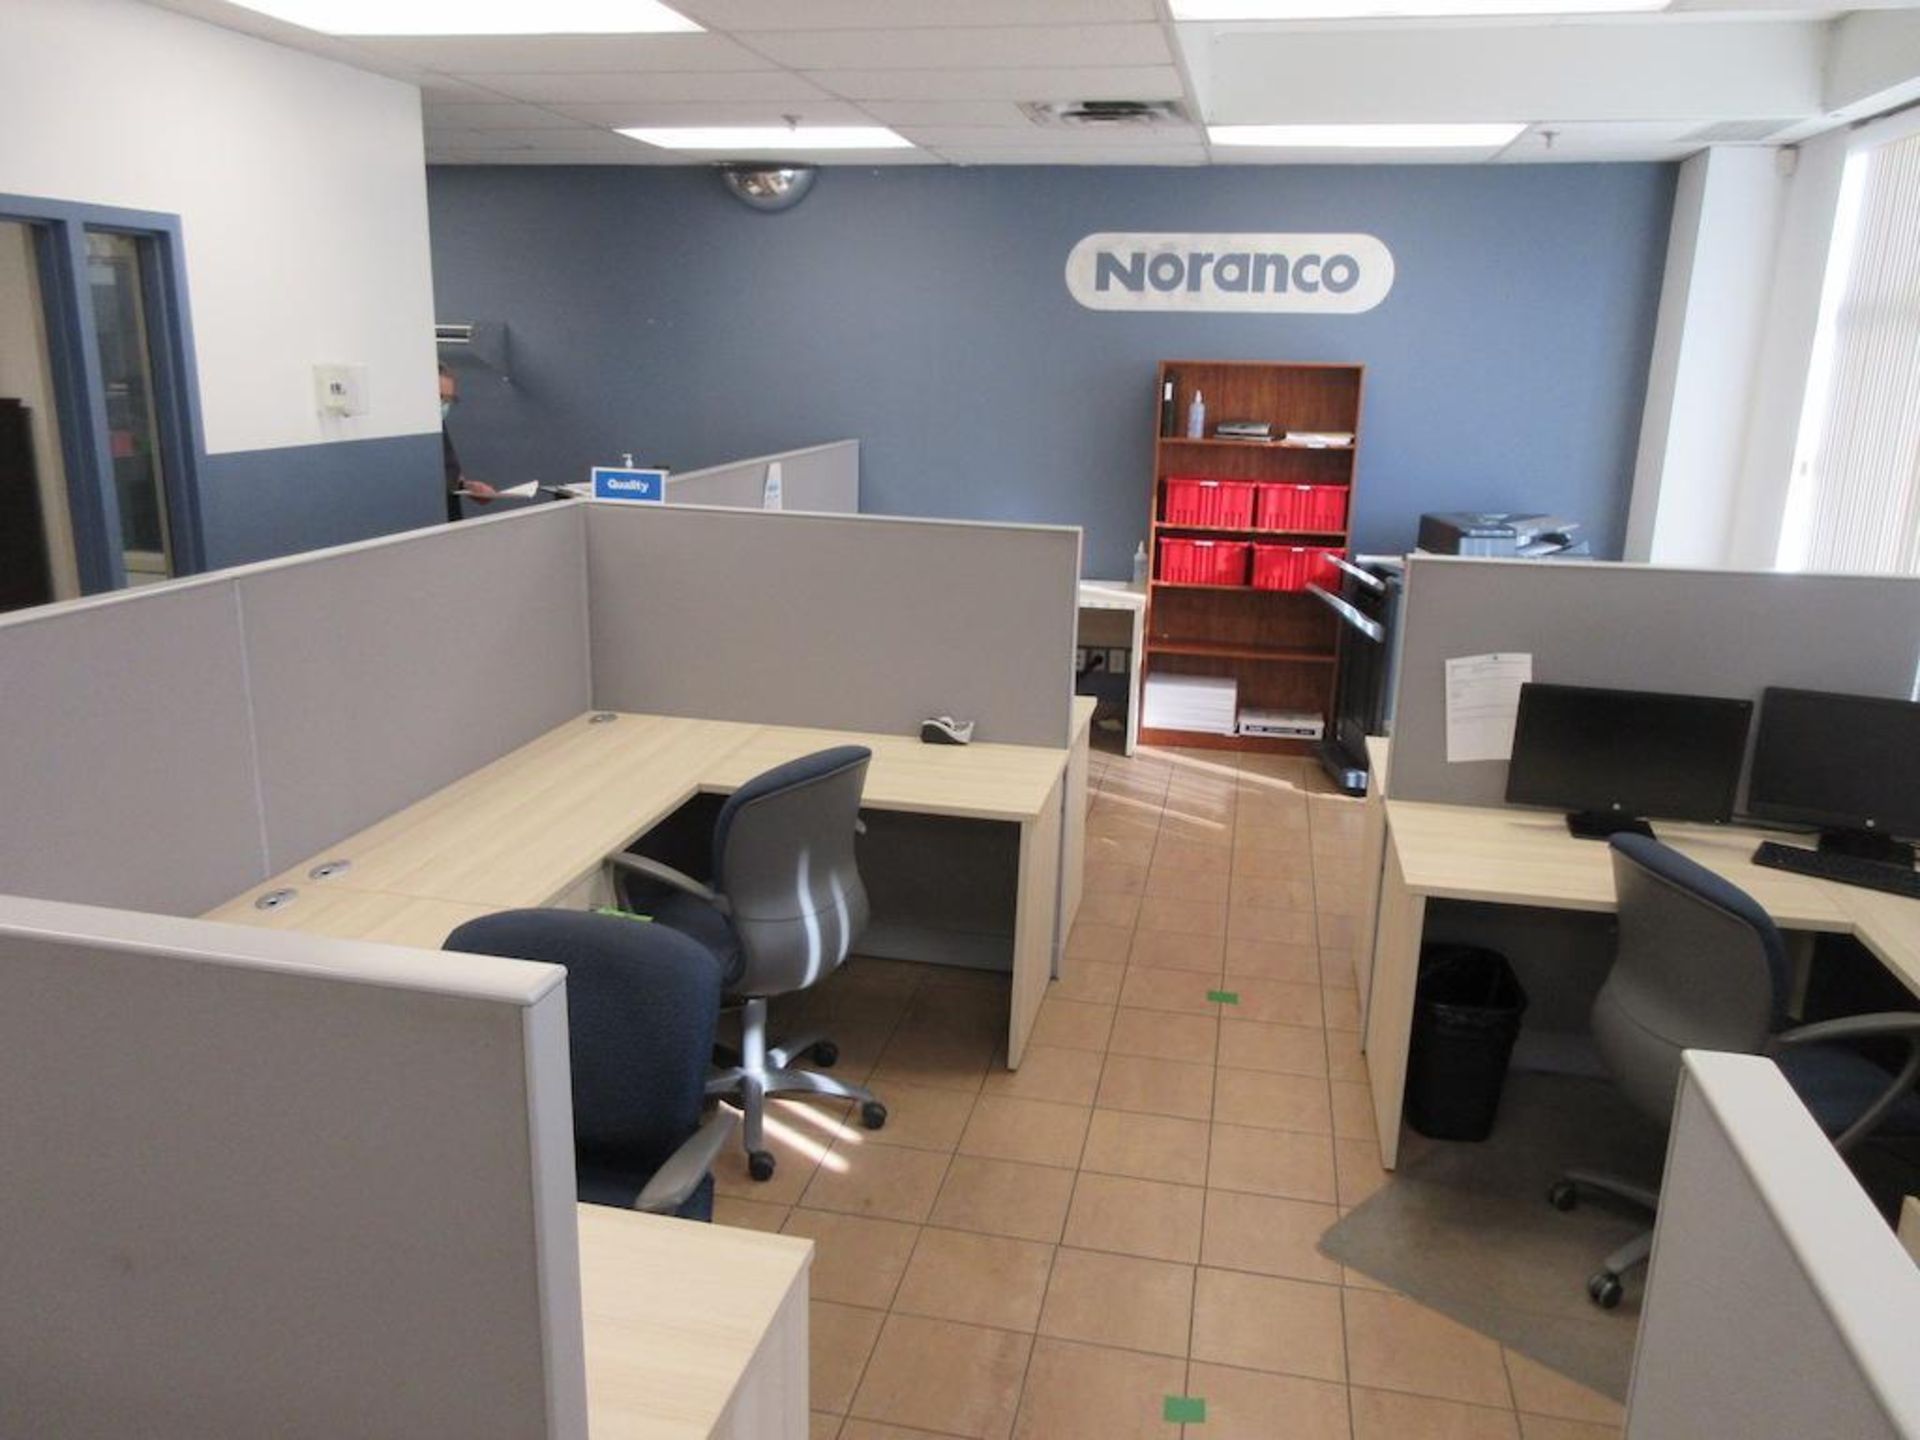 6 station grey office cubicles approx 60" x 60" x 60" w 6 light oak L shaped desks, 6 chairs, 4 dr l